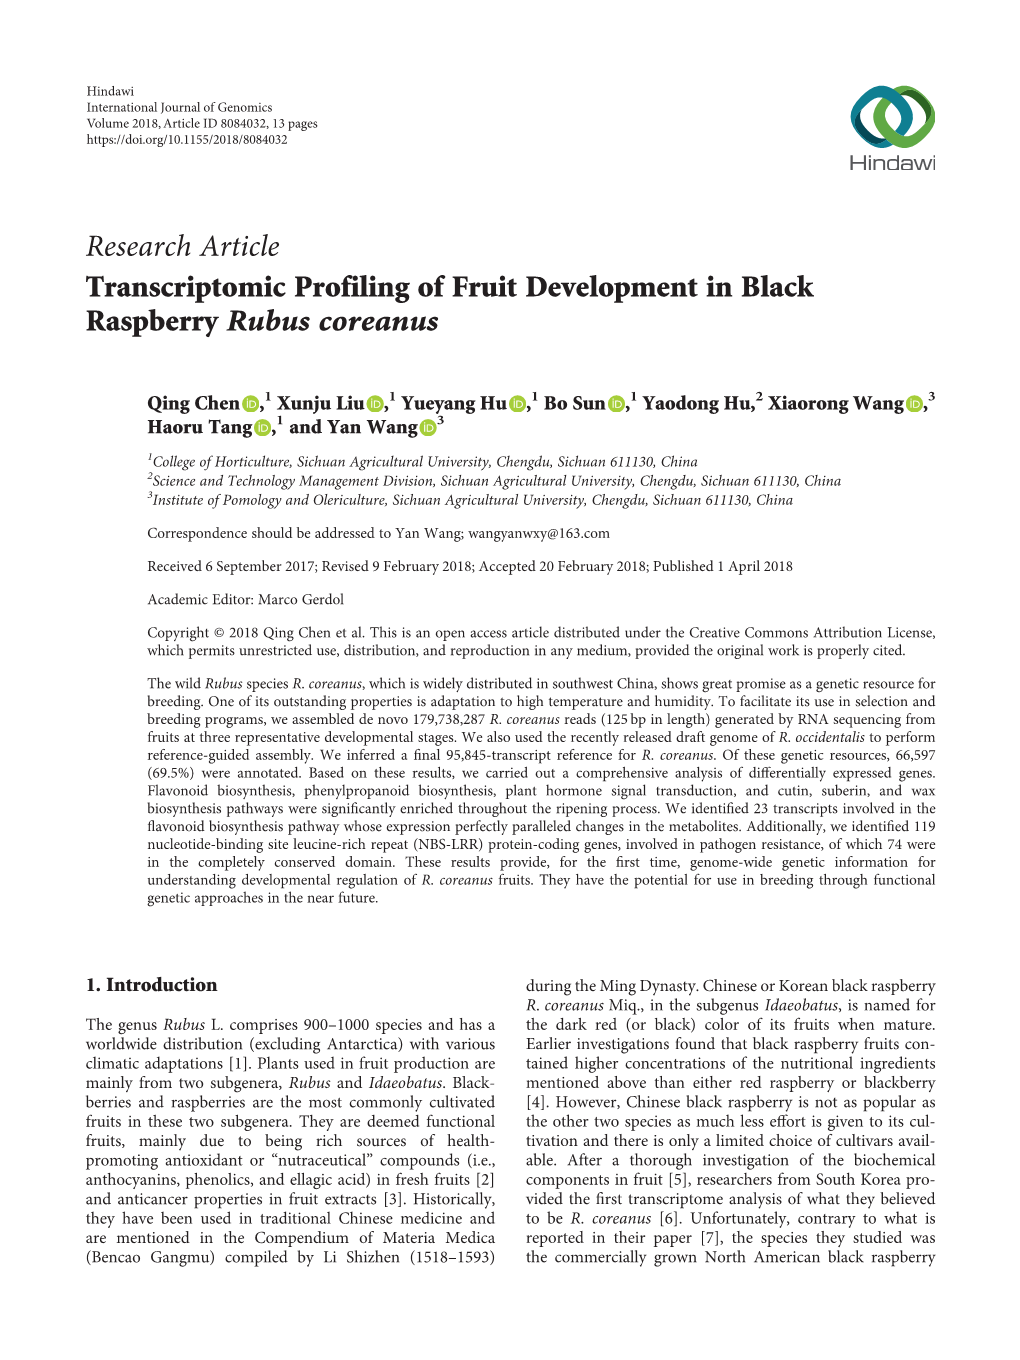 Research Article Transcriptomic Profiling of Fruit Development in Black Raspberry Rubus Coreanus